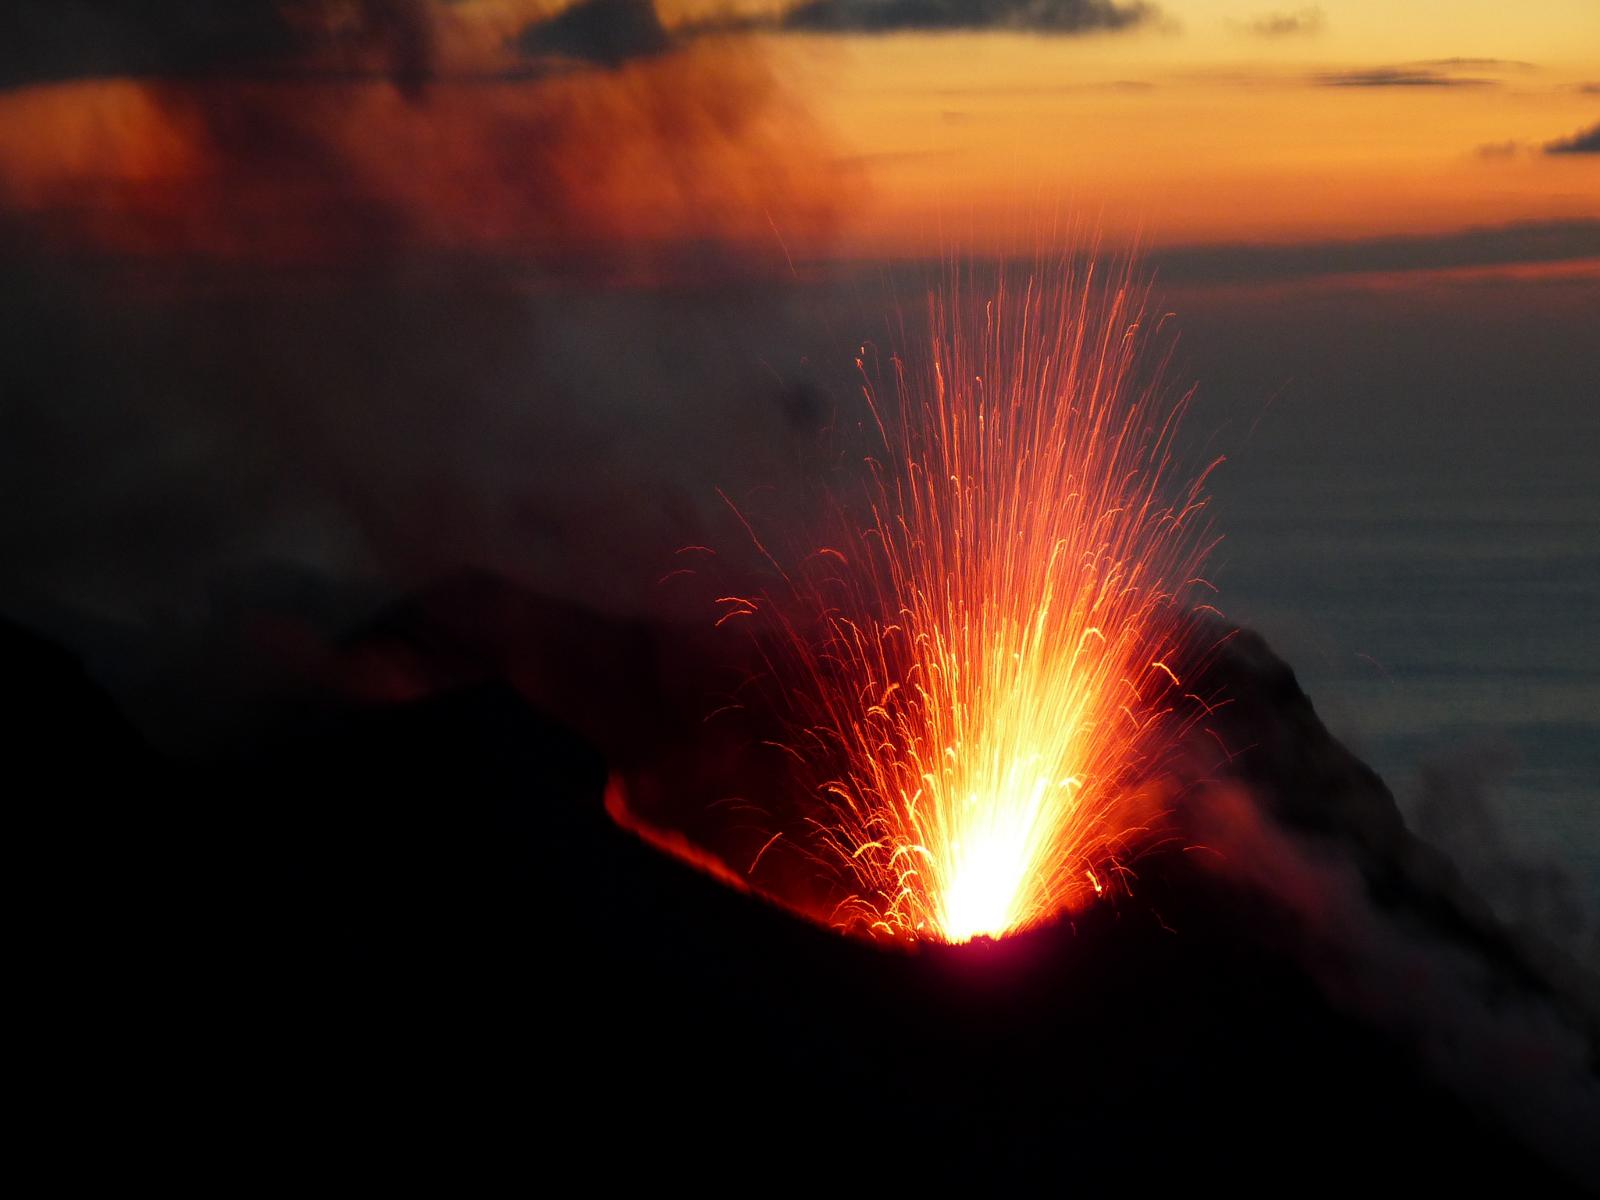 Spektakulrer Aussto vulkanischer Asche bei Nacht - Lupe Reisen